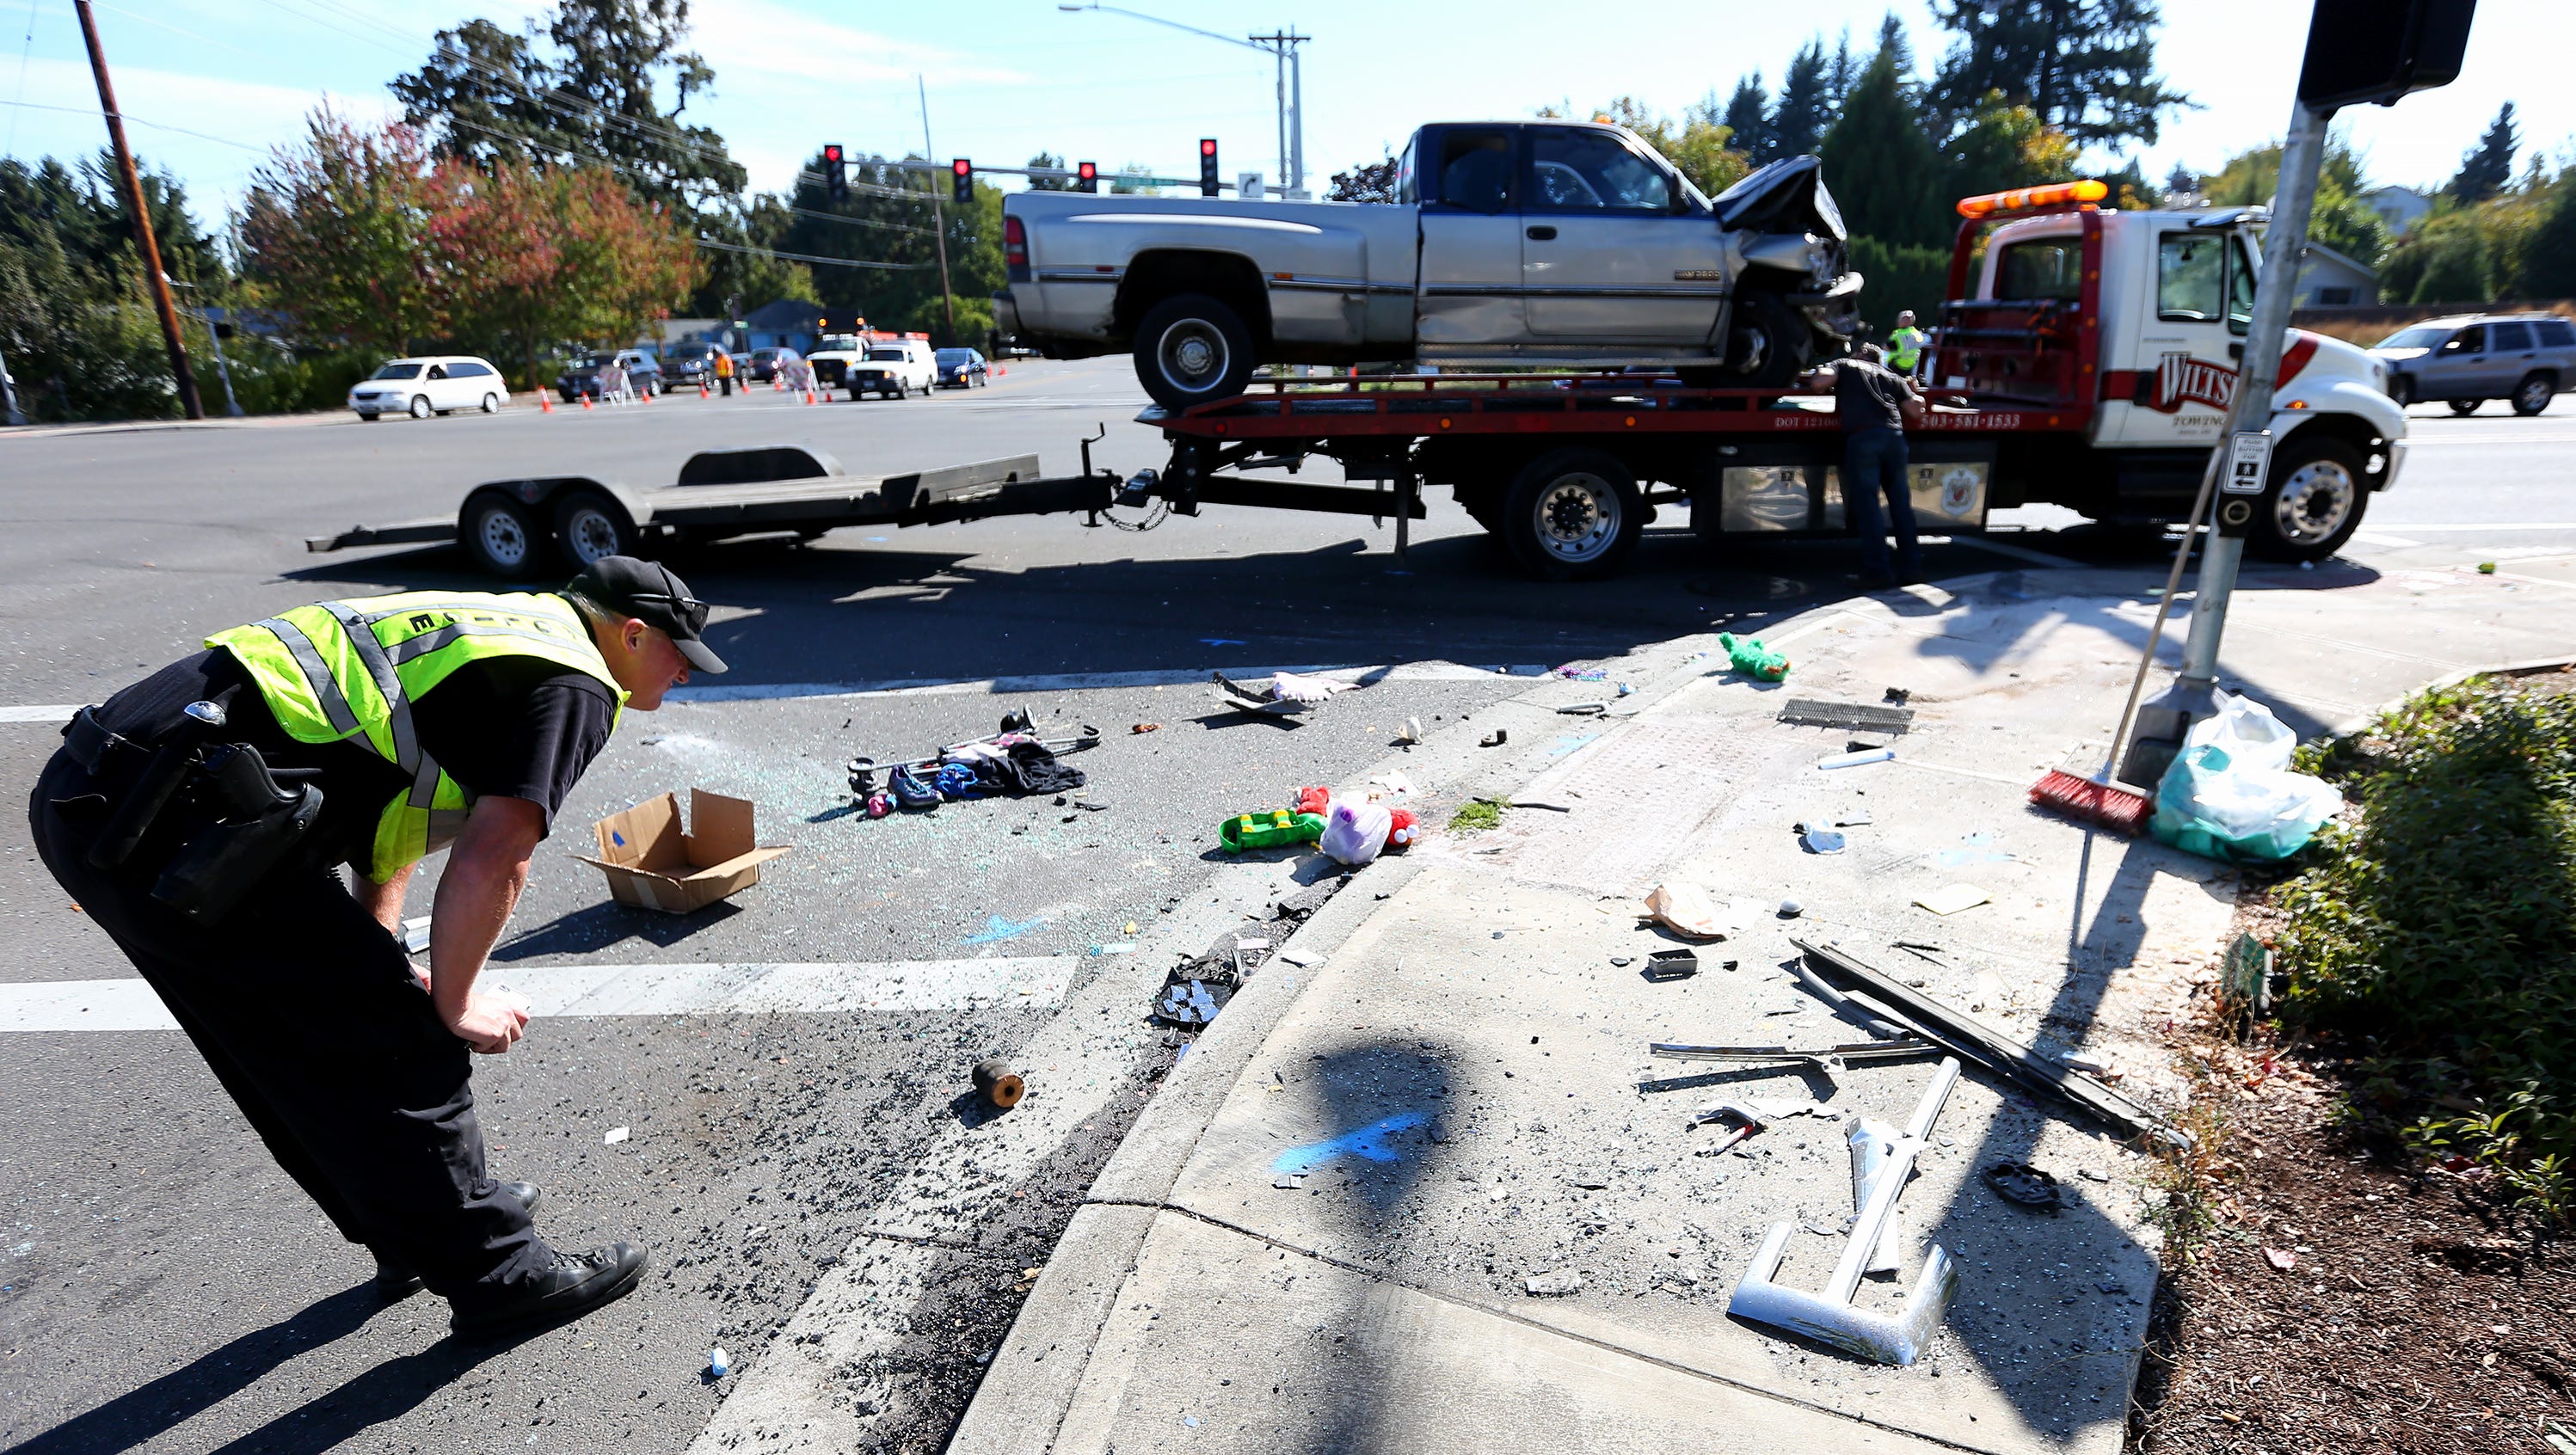 Fatal auto crashes in Oregon on the rise again